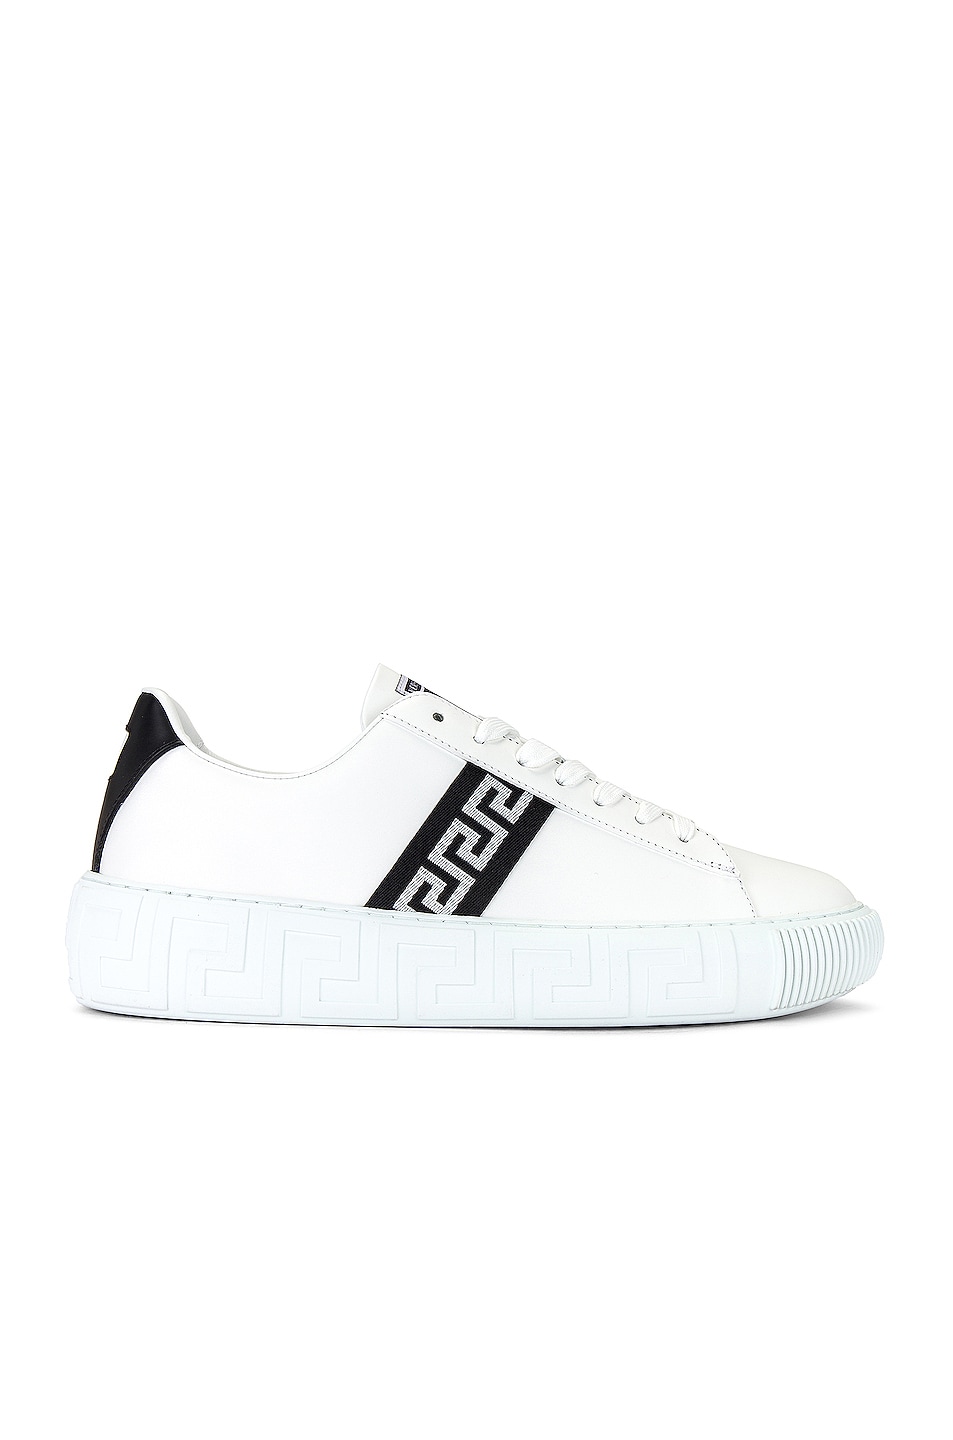 VERSACE Greca Sneaker in White & Black | FWRD